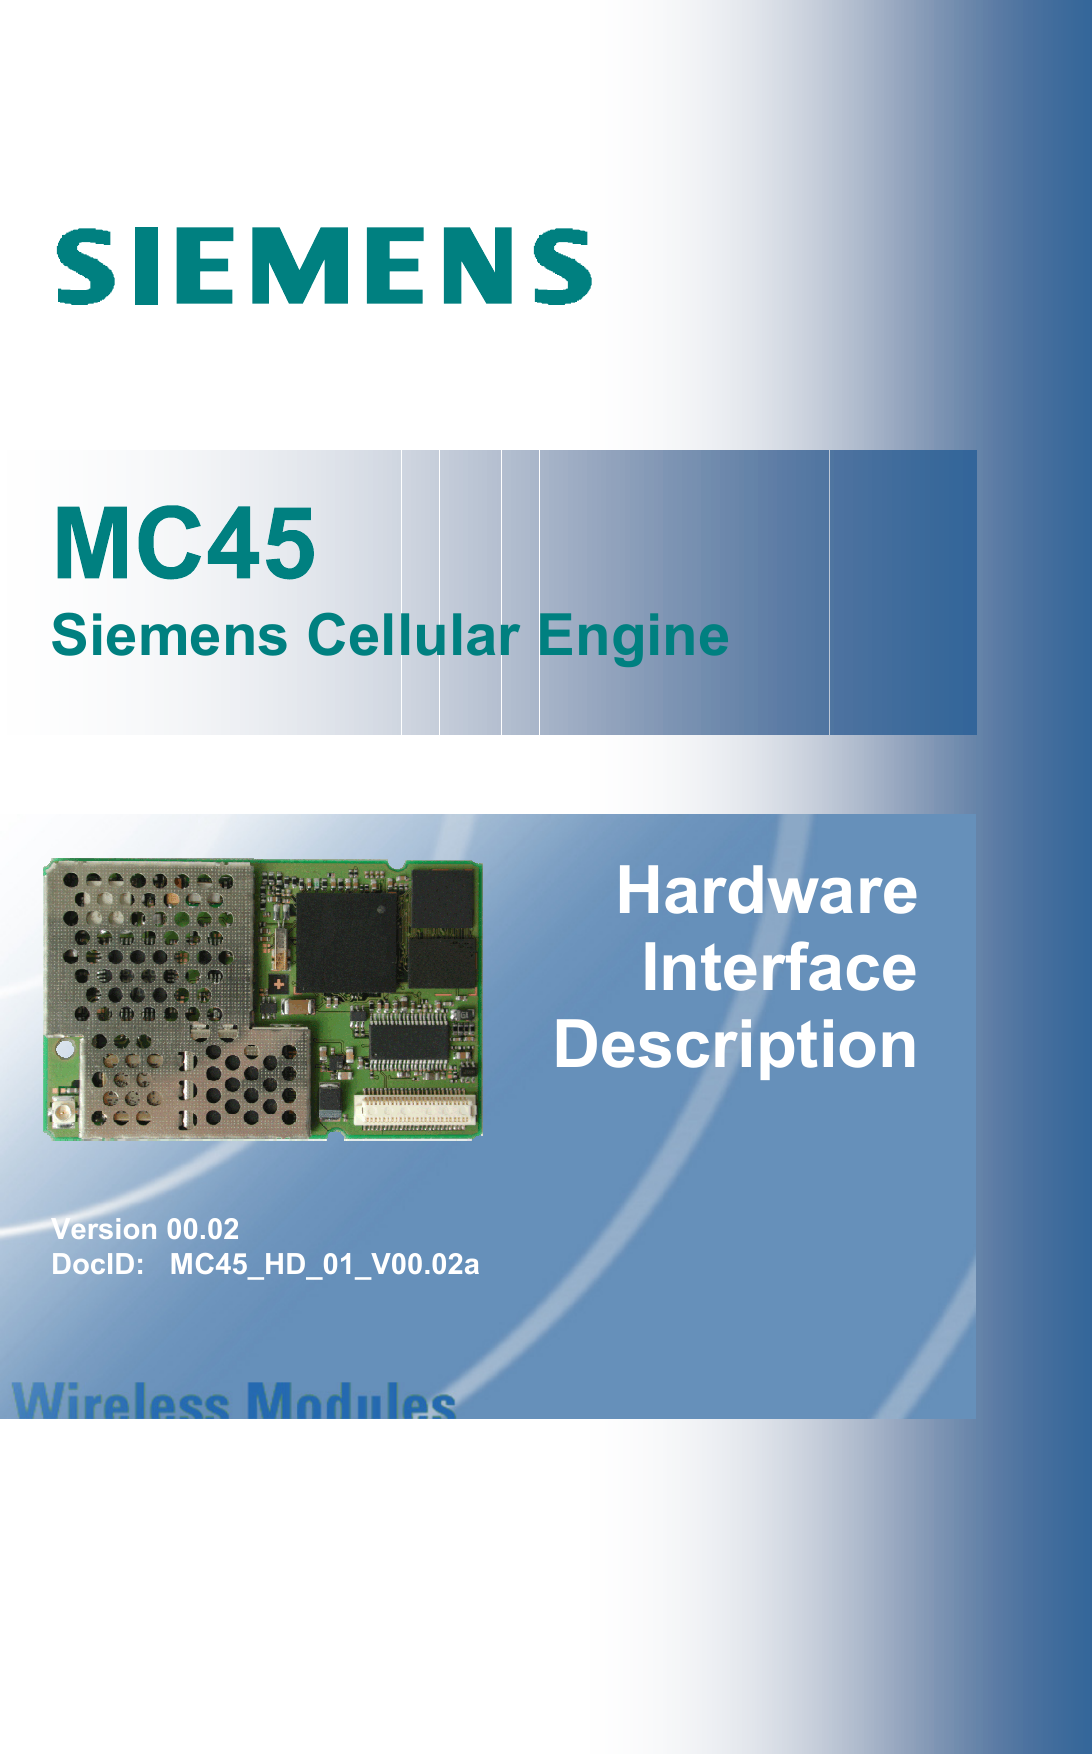                            Siemens Cellular Engine HardwareInterfaceDescription    Version 00.02 DocID:   MC45_HD_01_V00.02a  